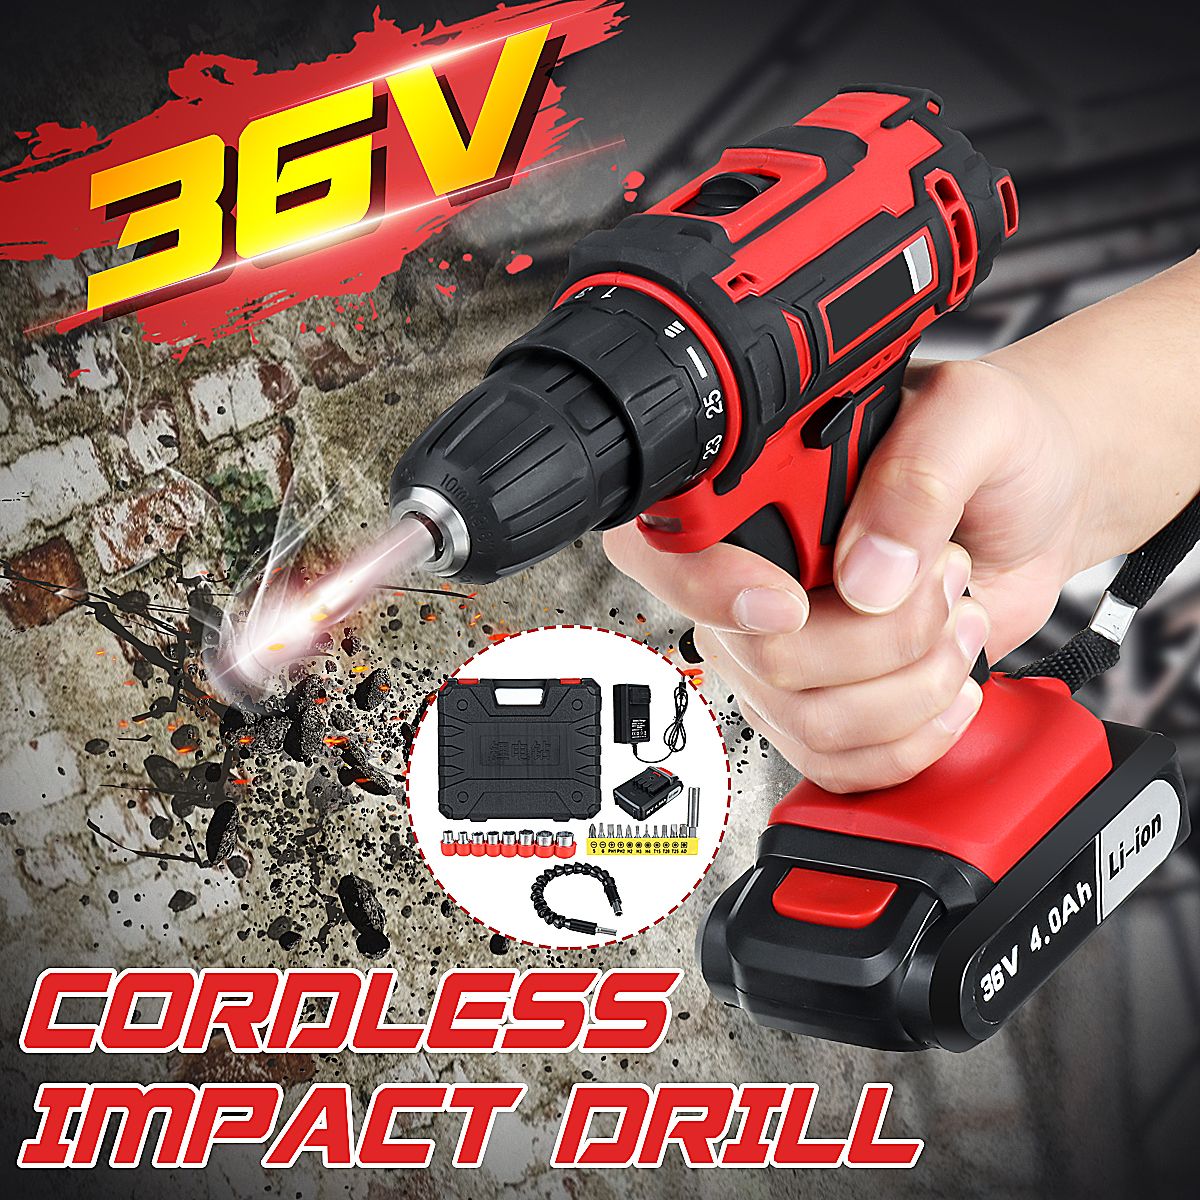 36V-Cordless-Electric-Impact-Drill-2-Speed-LED-Light-Power-Tool-Screw-Driver-Kit-1618175